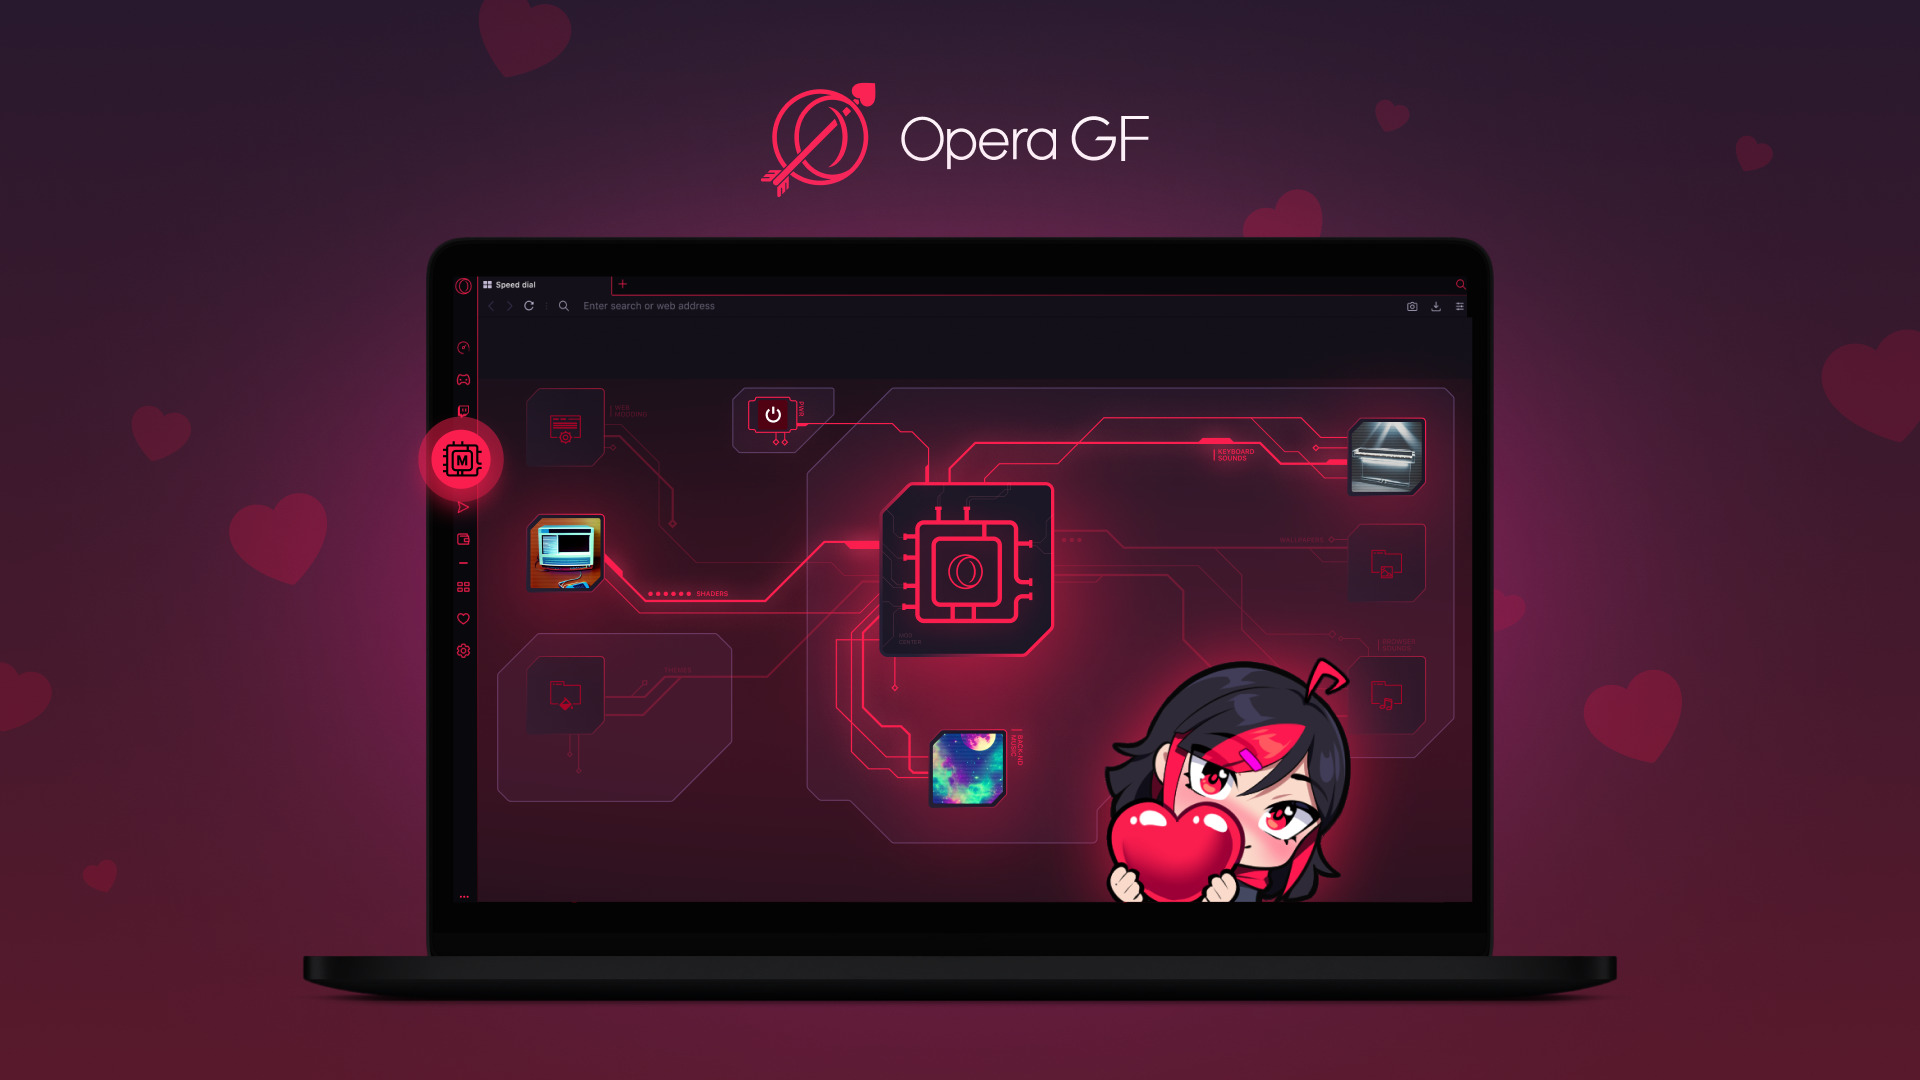 Opera GX becomes Opera GF for Valentine's Day